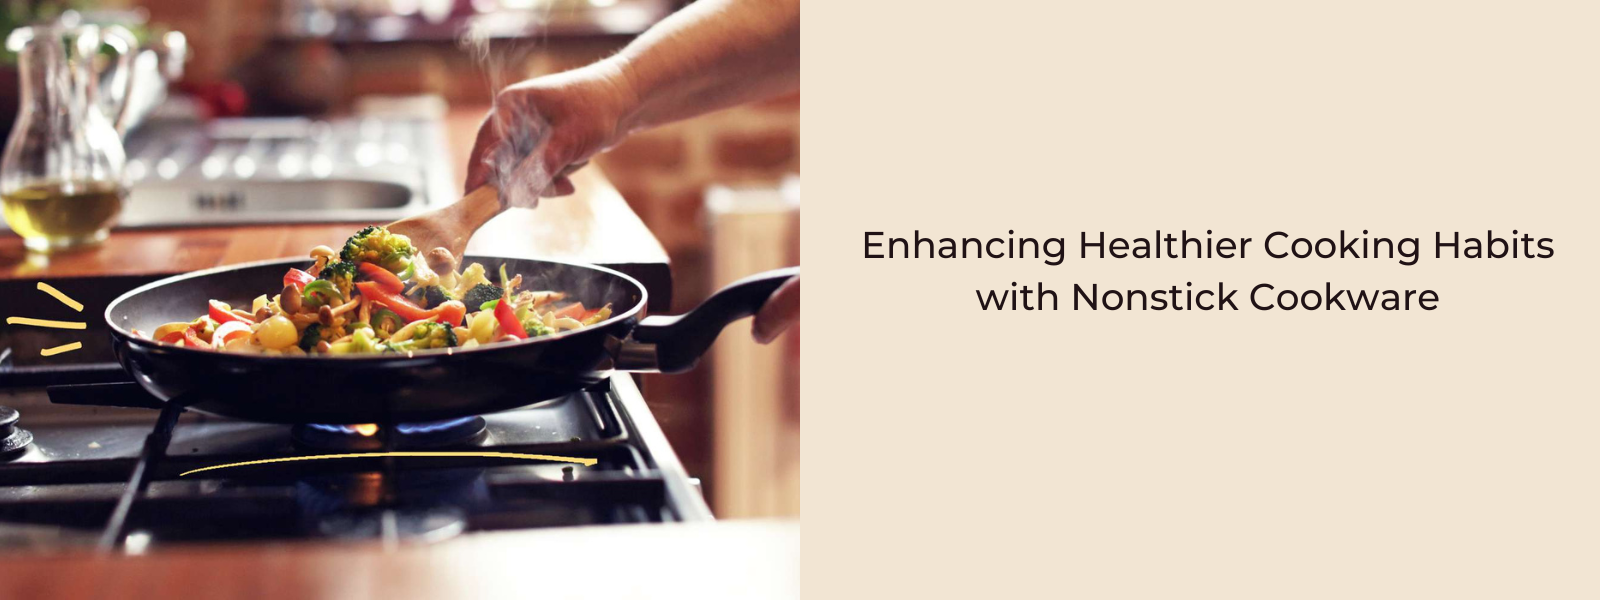 Enhancing Healthier Cooking Habits with Nonstick Cookware